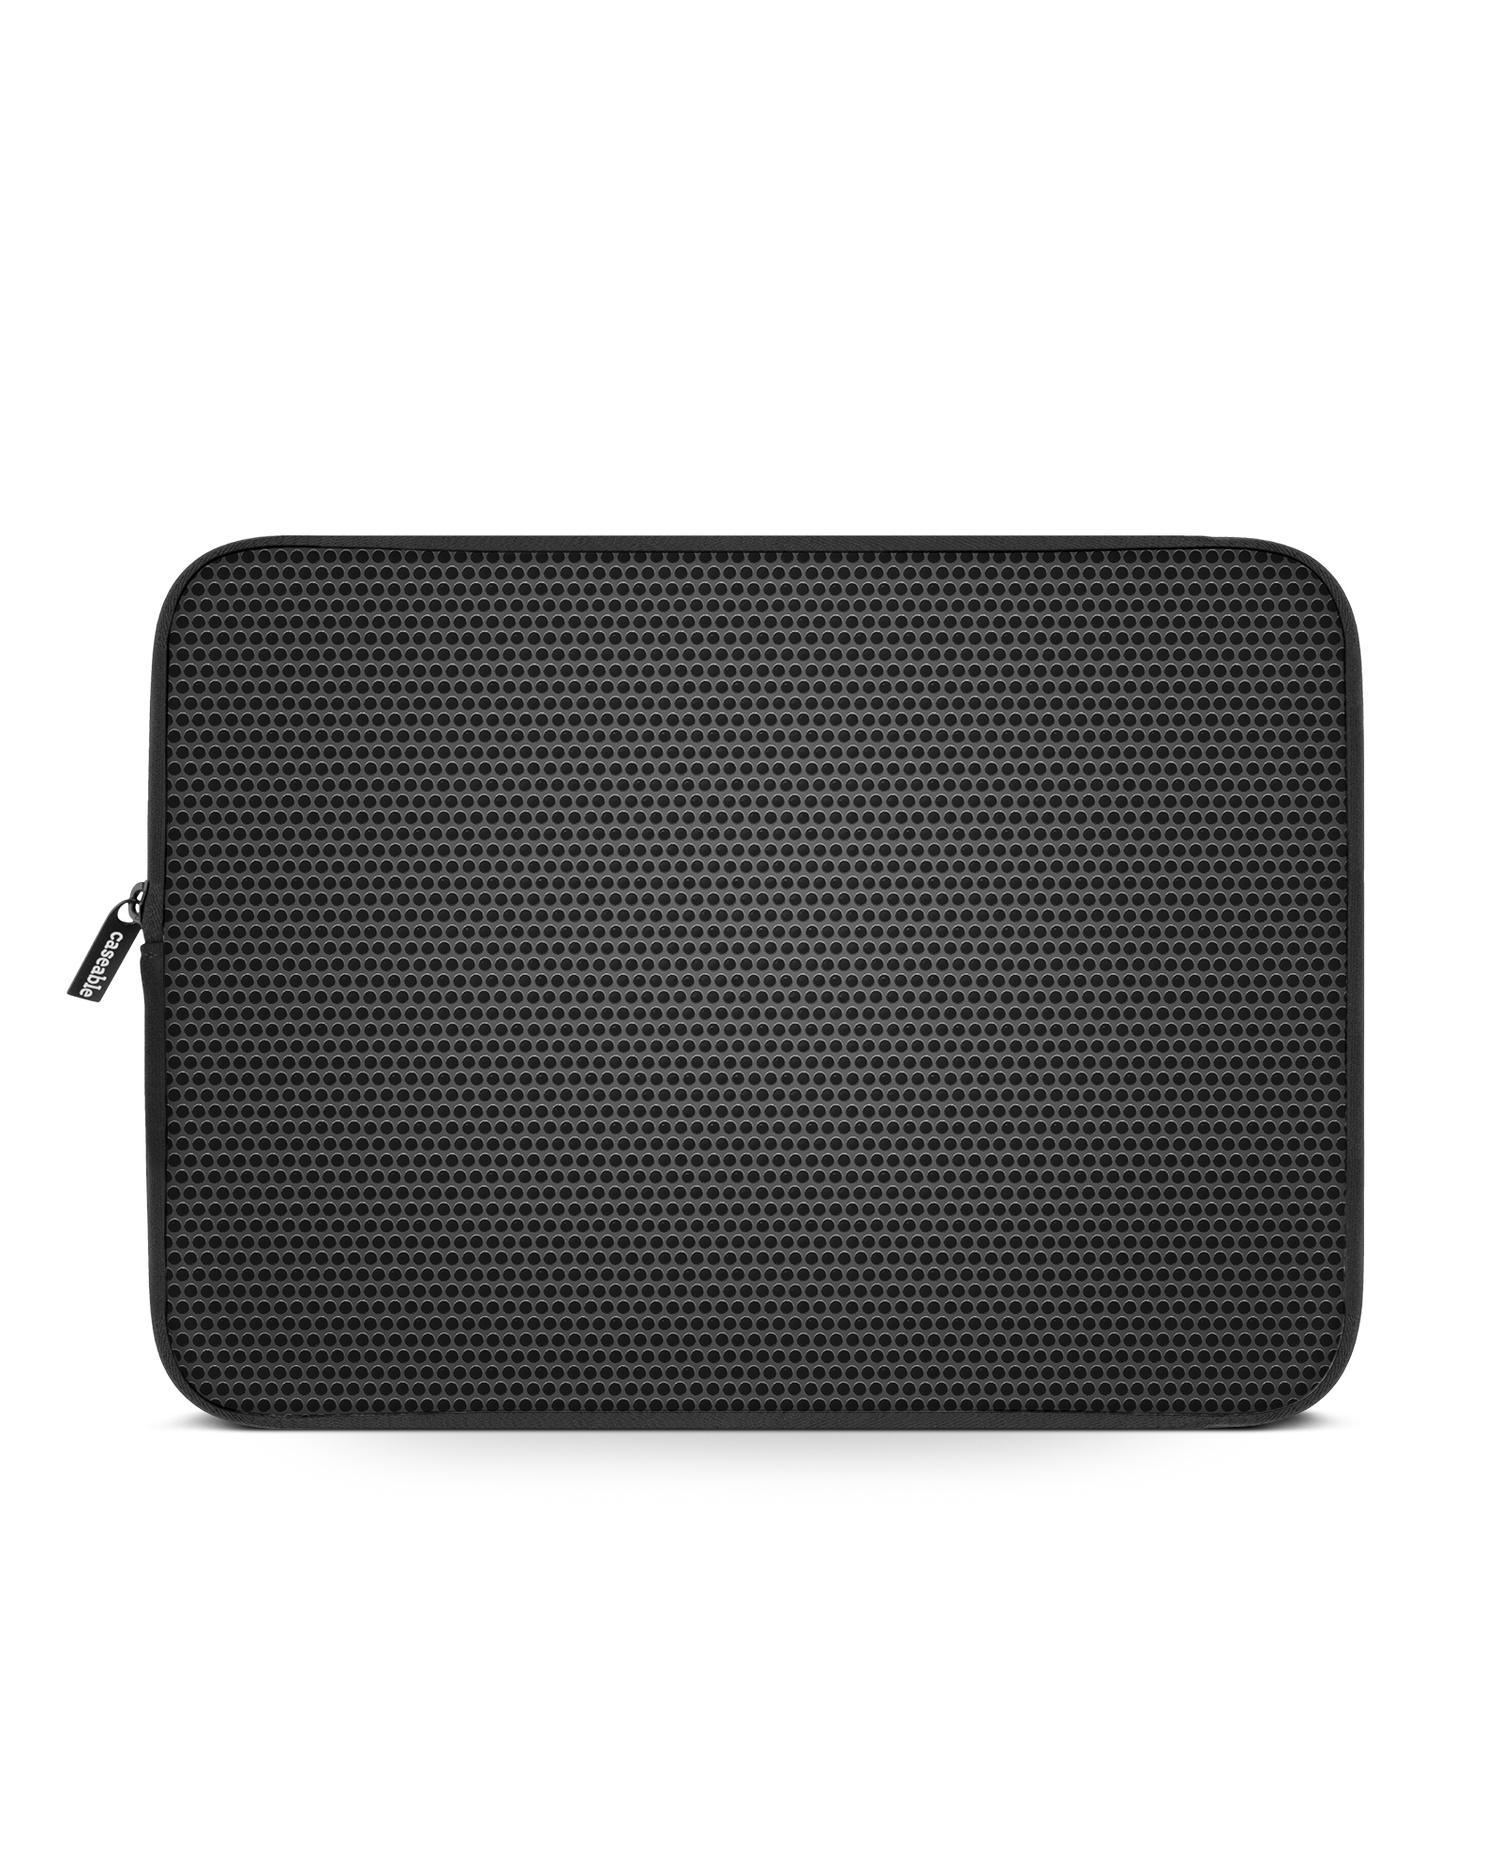 Carbon II Laptop Case 15 inch: Front View